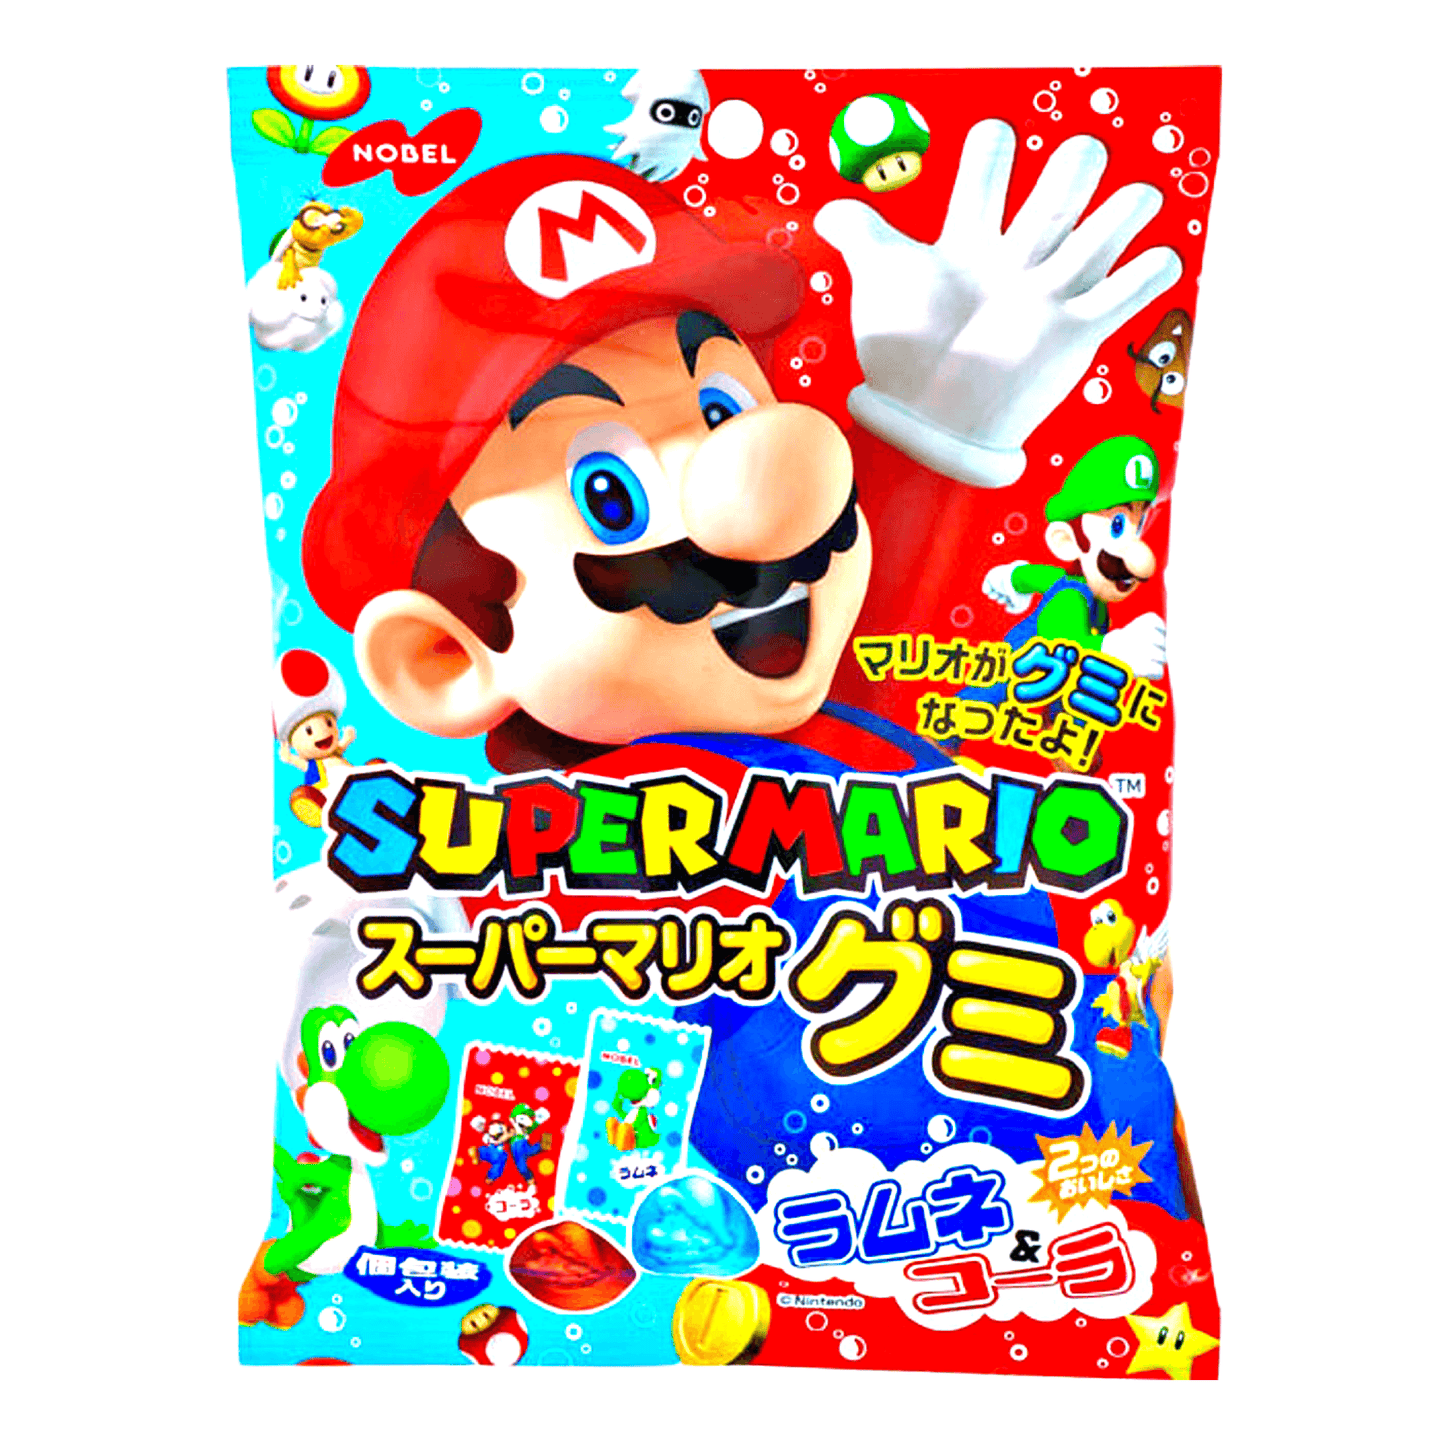 Nobel Super Mario Gummy Candy 90g - The Snacks Box - Asian Snacks Store - The Snacks Box - Korean Snack - Japanese Snack